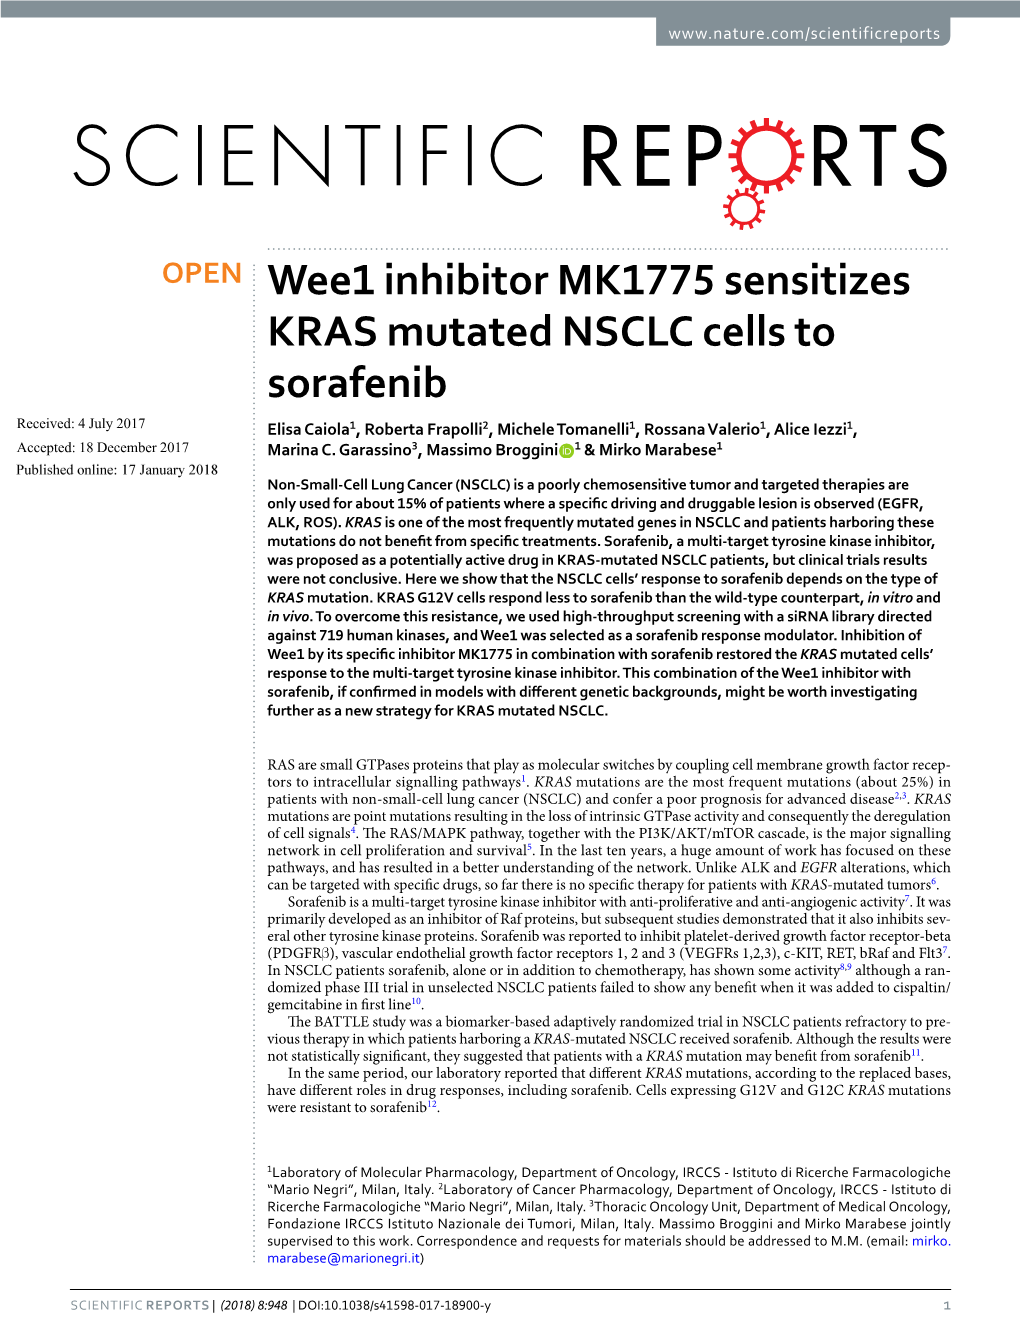 Wee1 Inhibitor MK1775 Sensitizes KRAS Mutated NSCLC Cells To